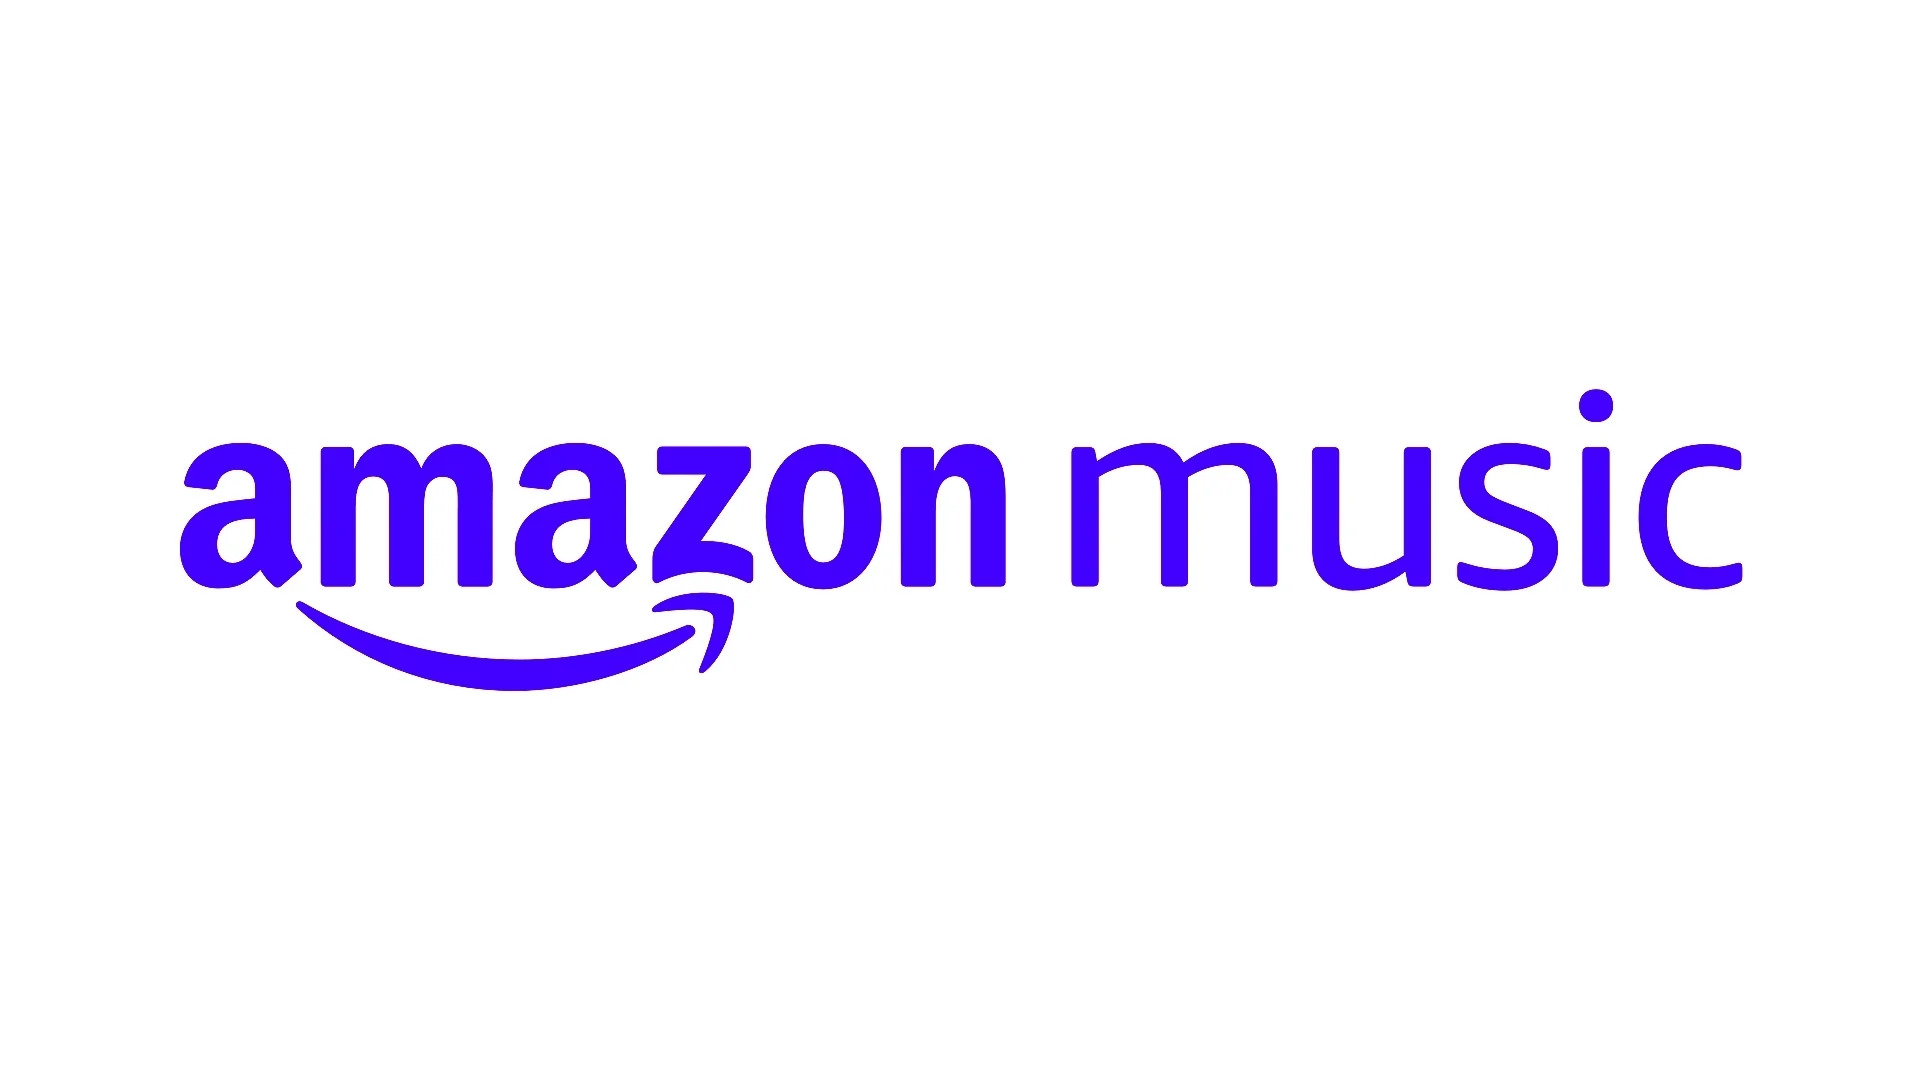 Inteligencia artificial para tu música: Amazon Music lanza Maestro